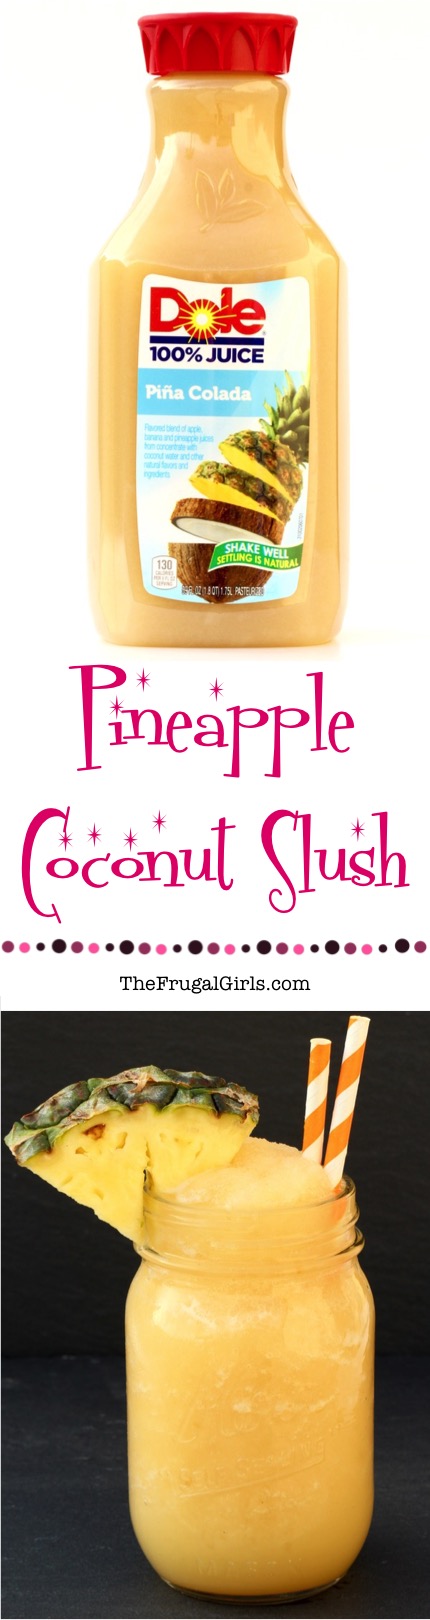 Pineapple Coconut Slush Pina Colada Recipe from TheFrugalGirls.com